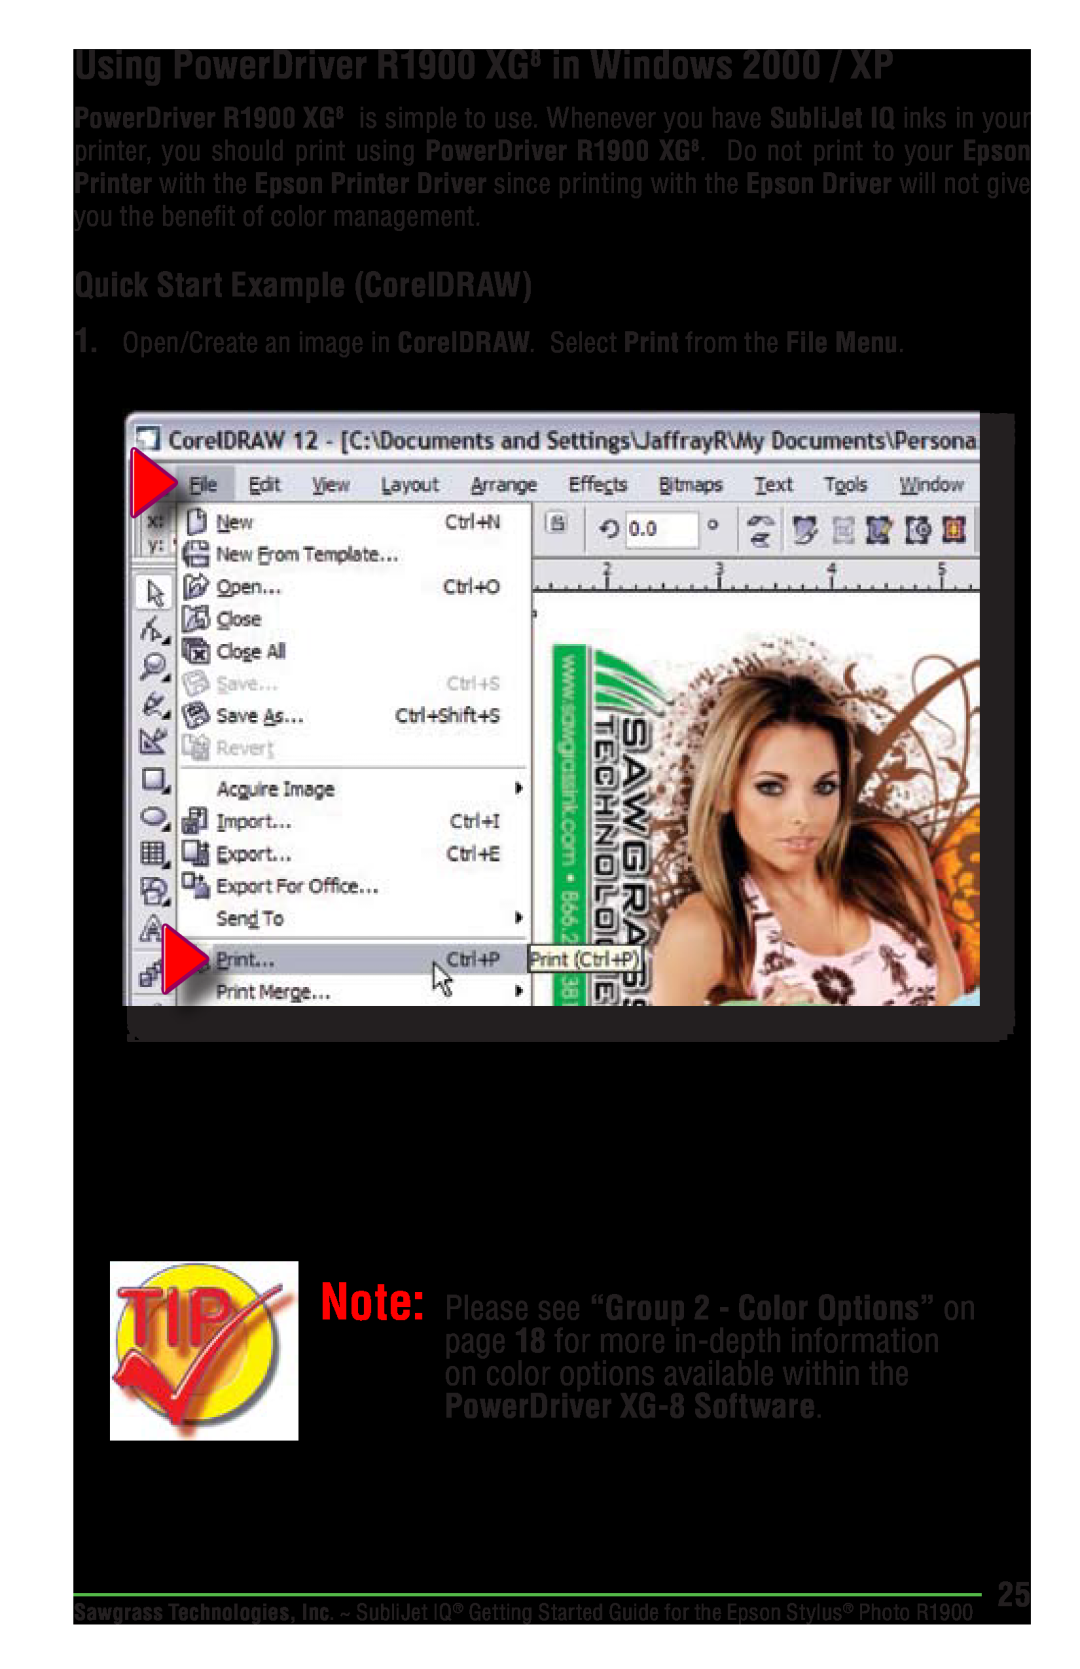 Epson manual Using PowerDriver R1900 XG8 in Windows 2000 / XP, Quick Start Example CorelDRAW 